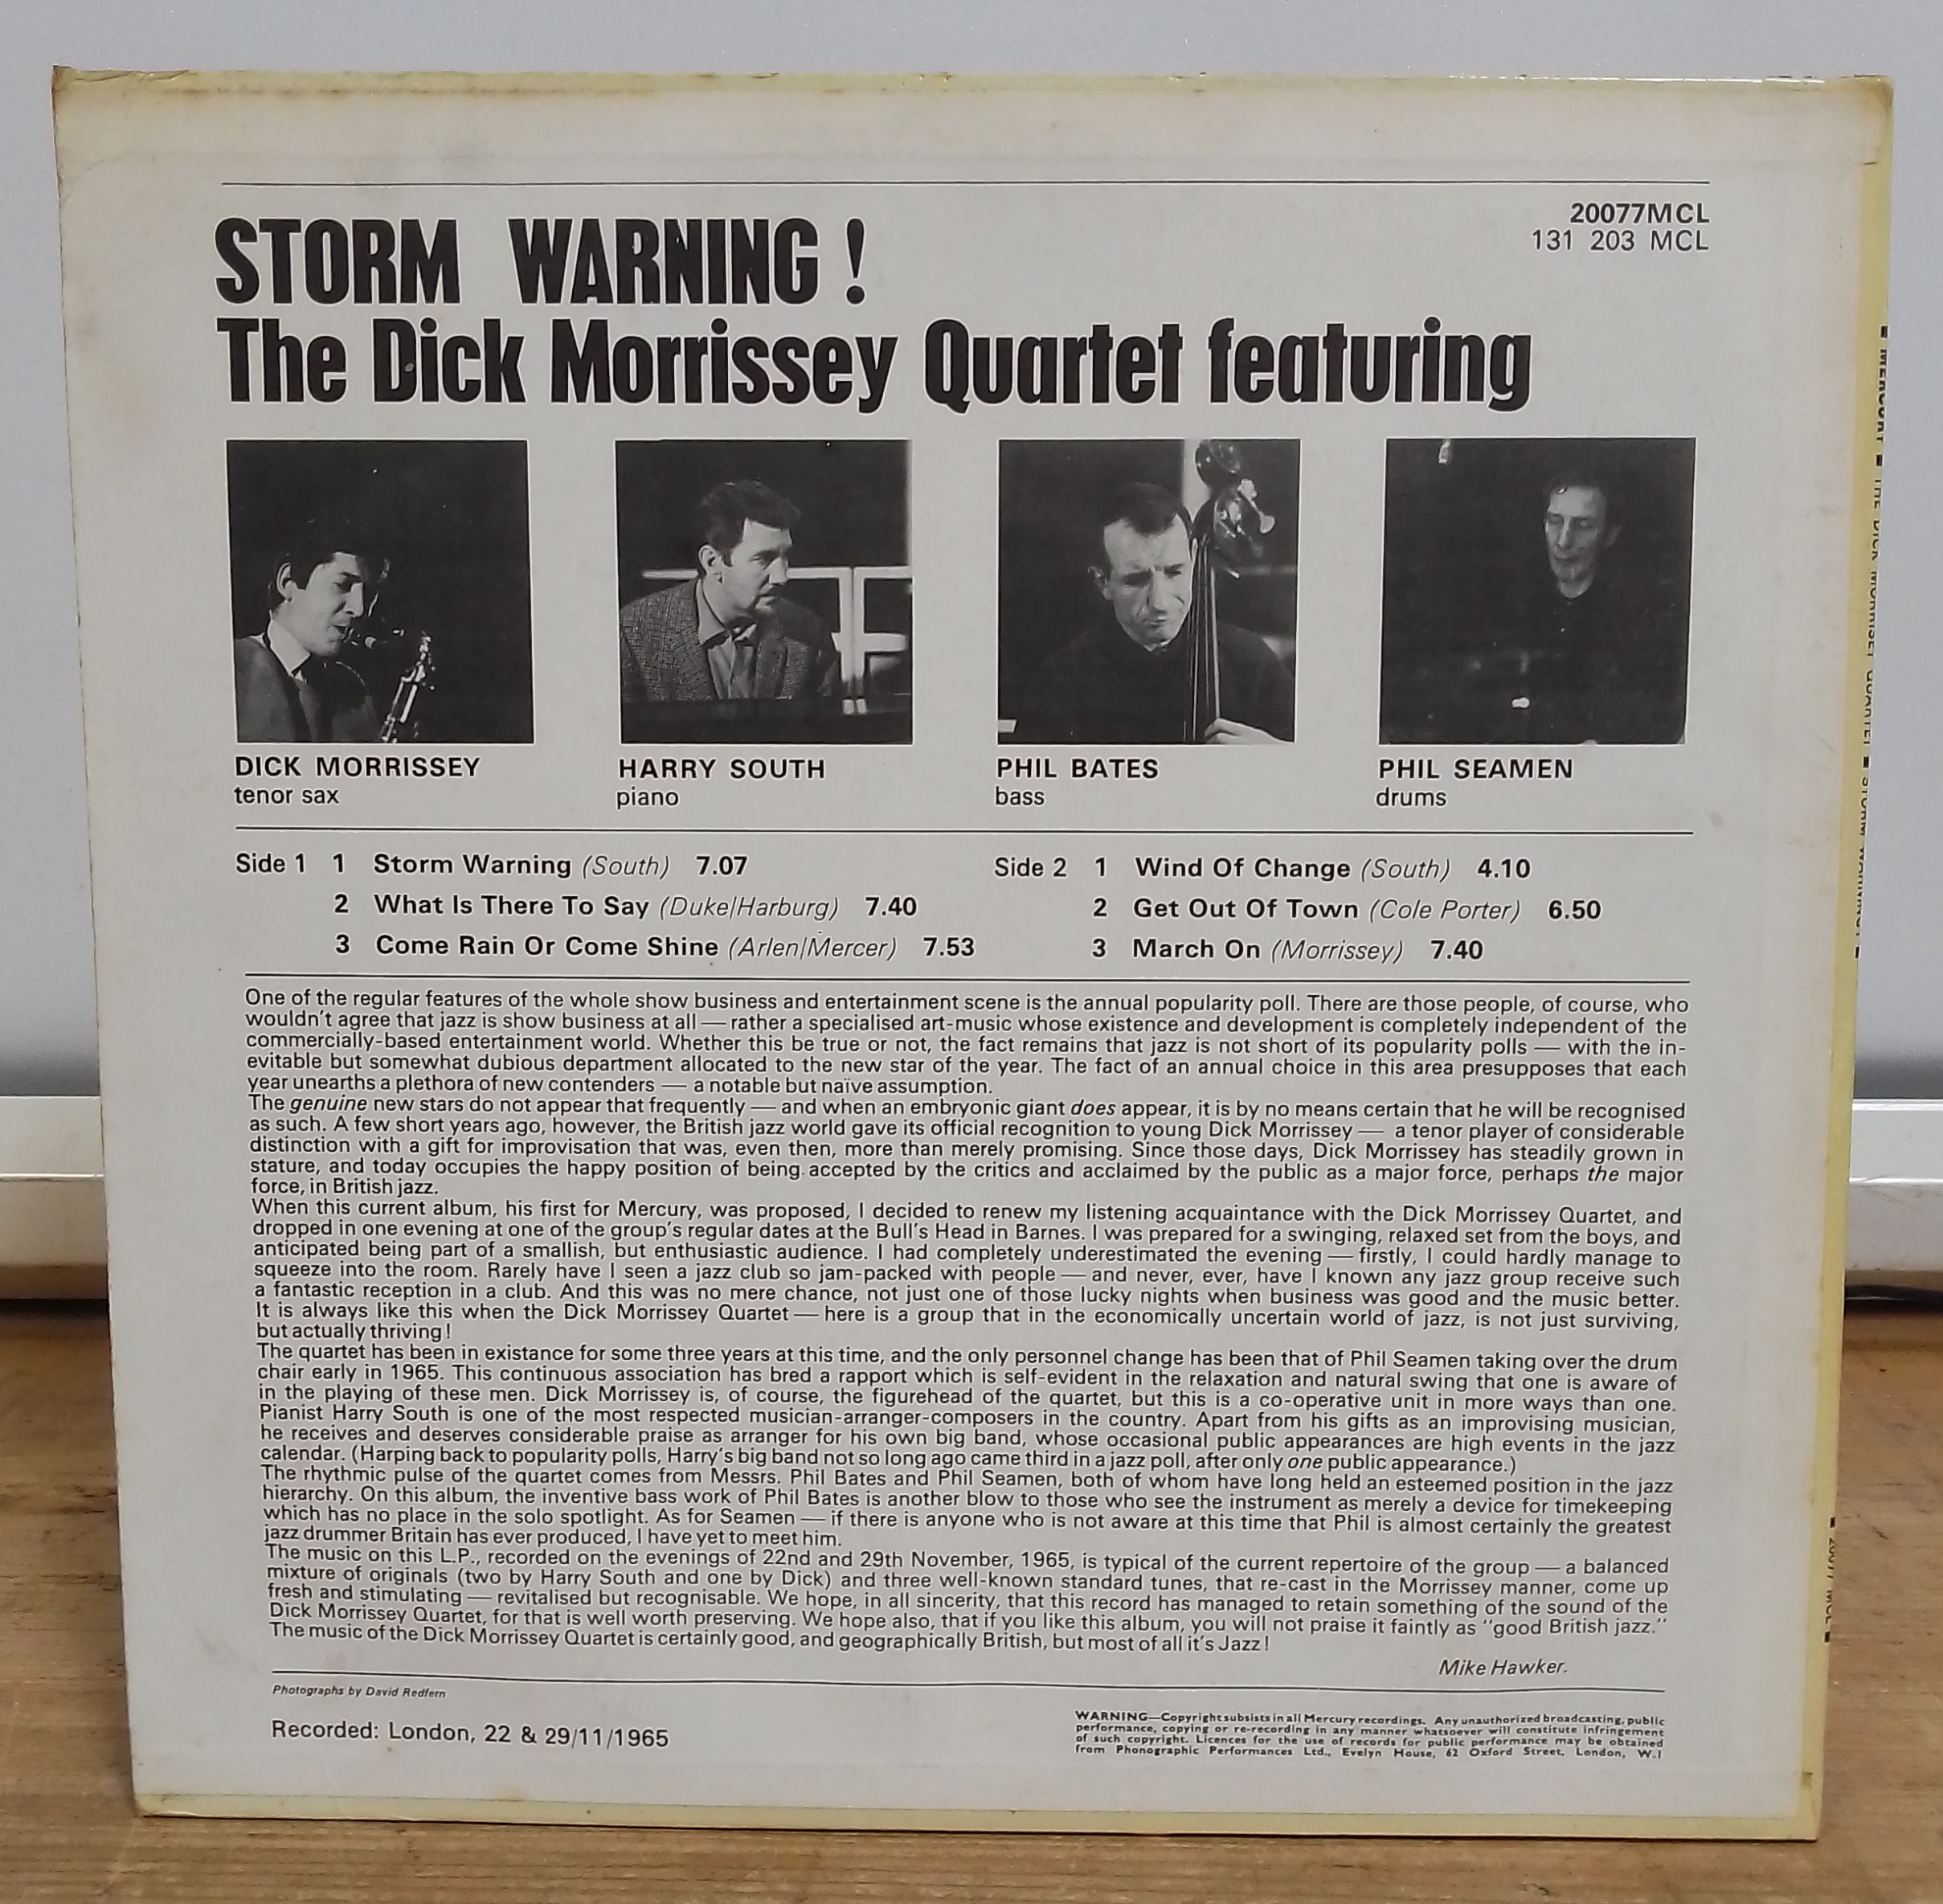 The Dick Morrissey Quartet - Storm Warning! mono LP, 1st pressing, UK 1966, Mercury 20077 MCL - Image 2 of 4